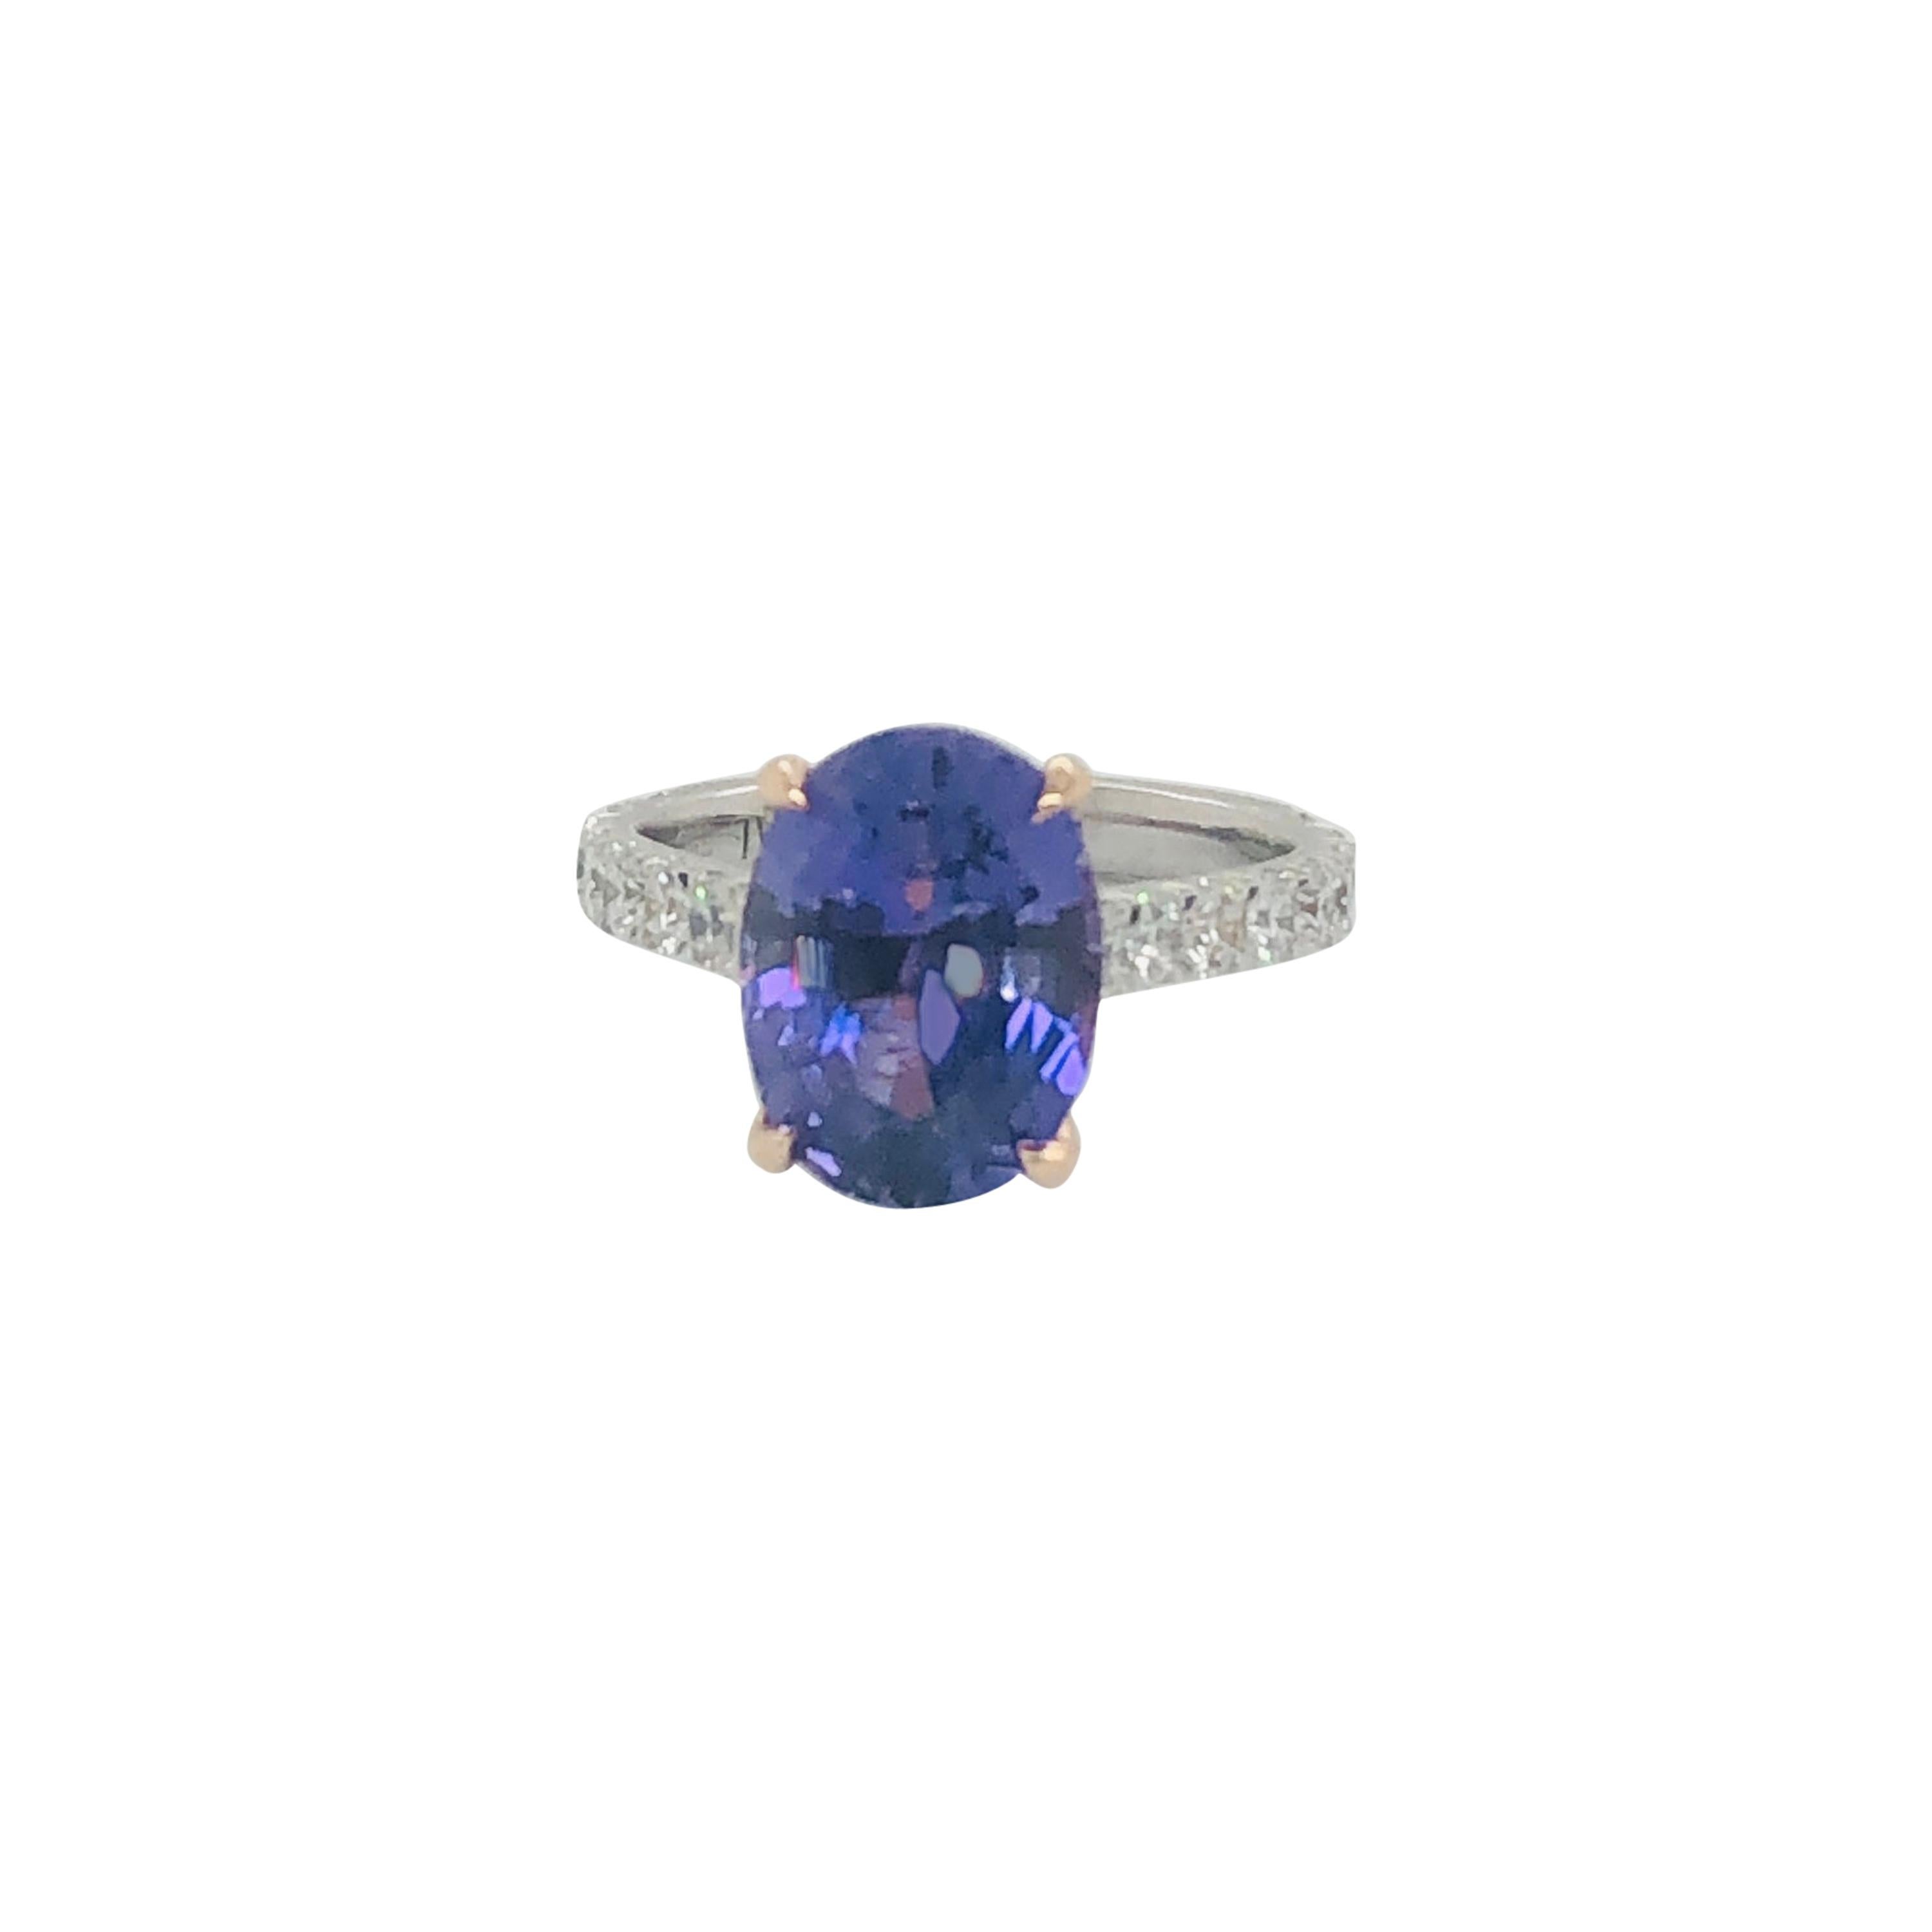 Certified Natural 5.23 Carat Sri Lankan Purple Sapphire Diamond Engagement Ring For Sale